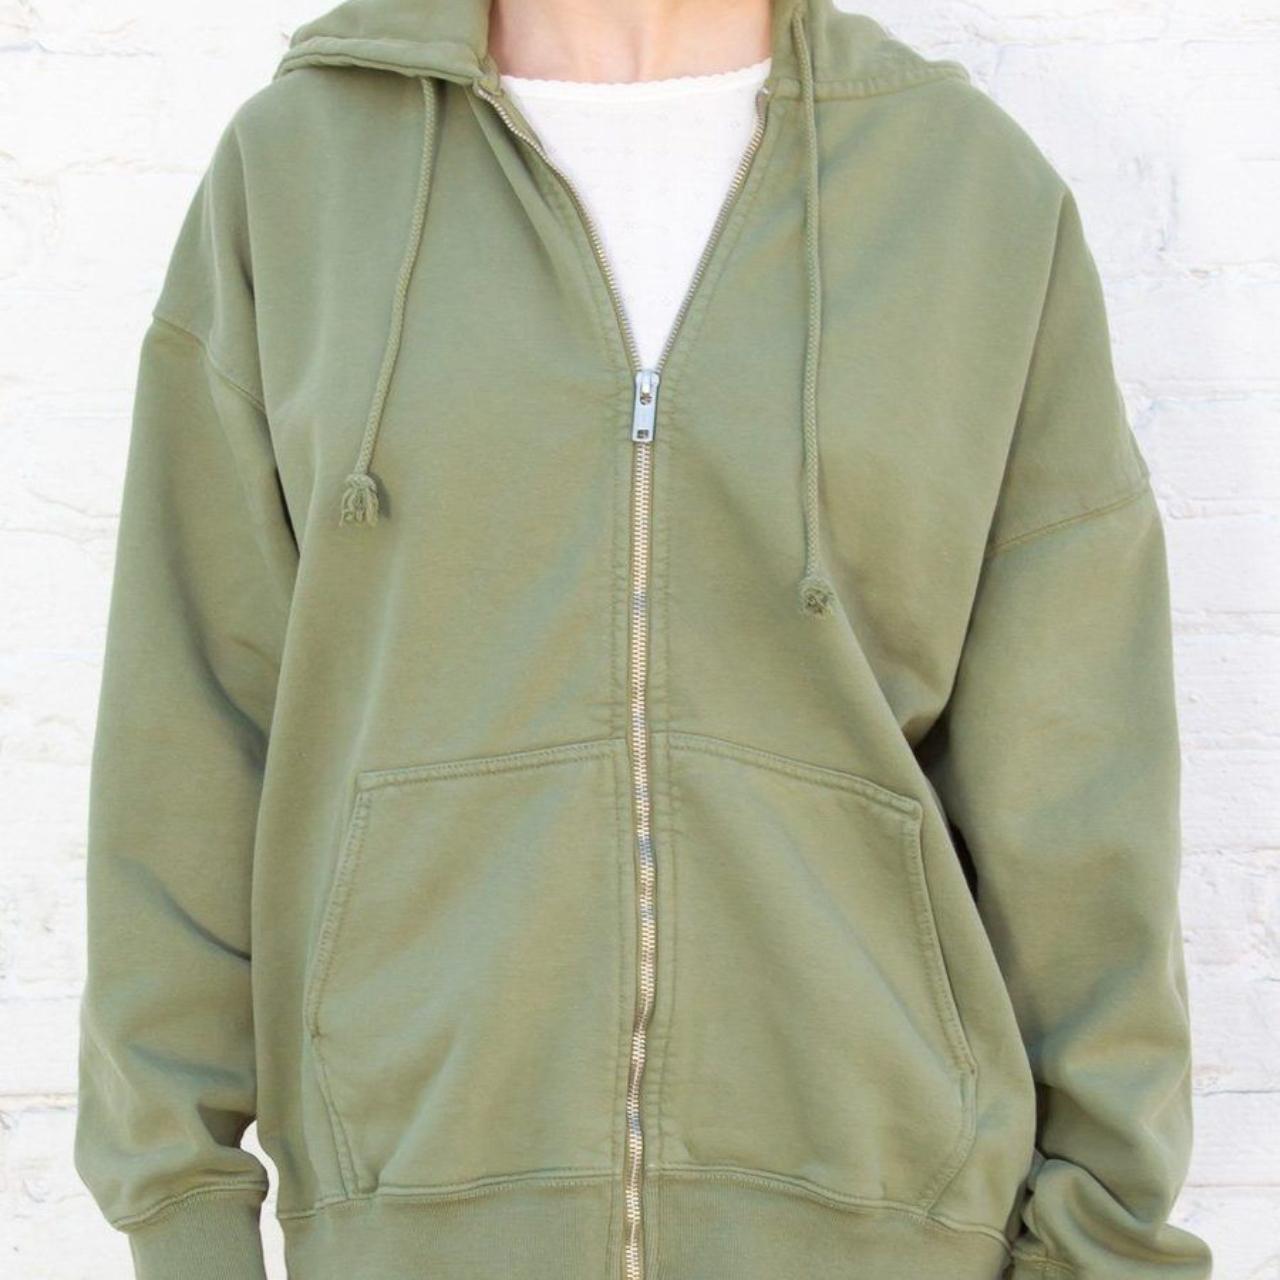 Brandy Melville Light Green Zip-Up Hoodie Sweatshirt - M/L (Approx